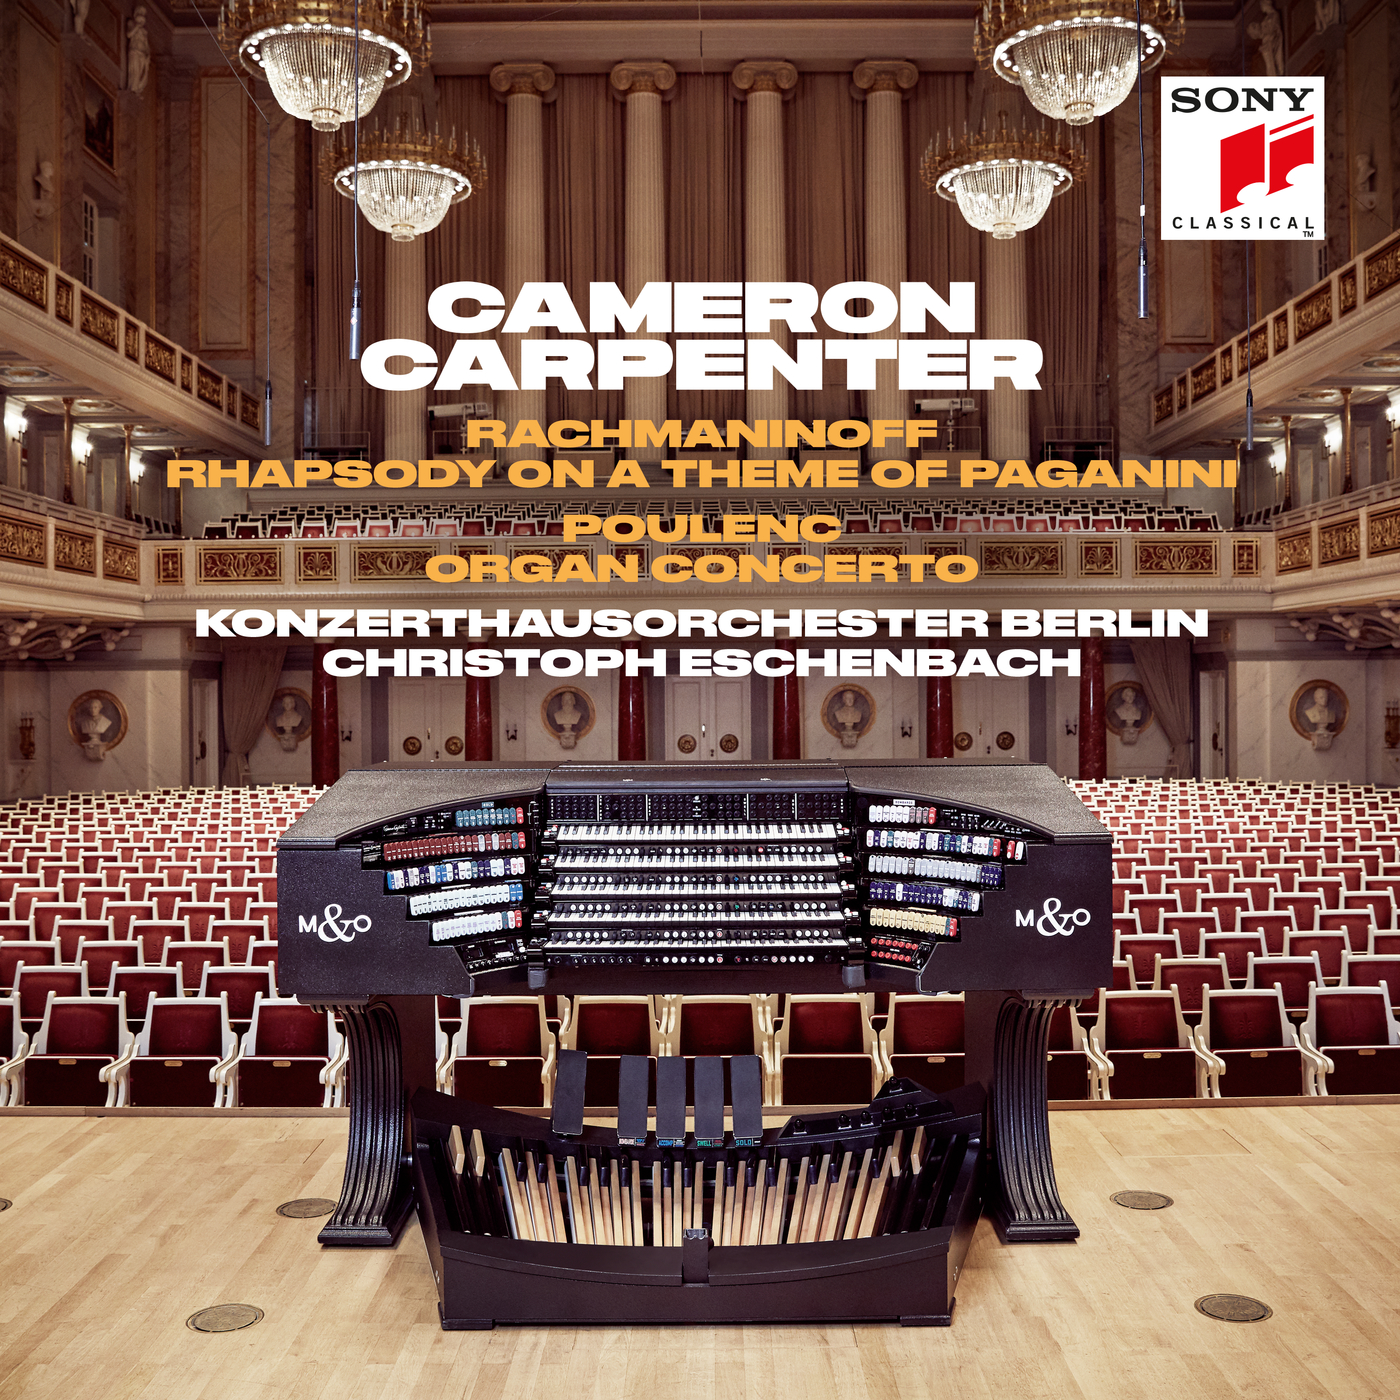 Concerto for Organ, Strings & Timpani in G Minor, FP 93:VII. Tempo Introduction - Largo